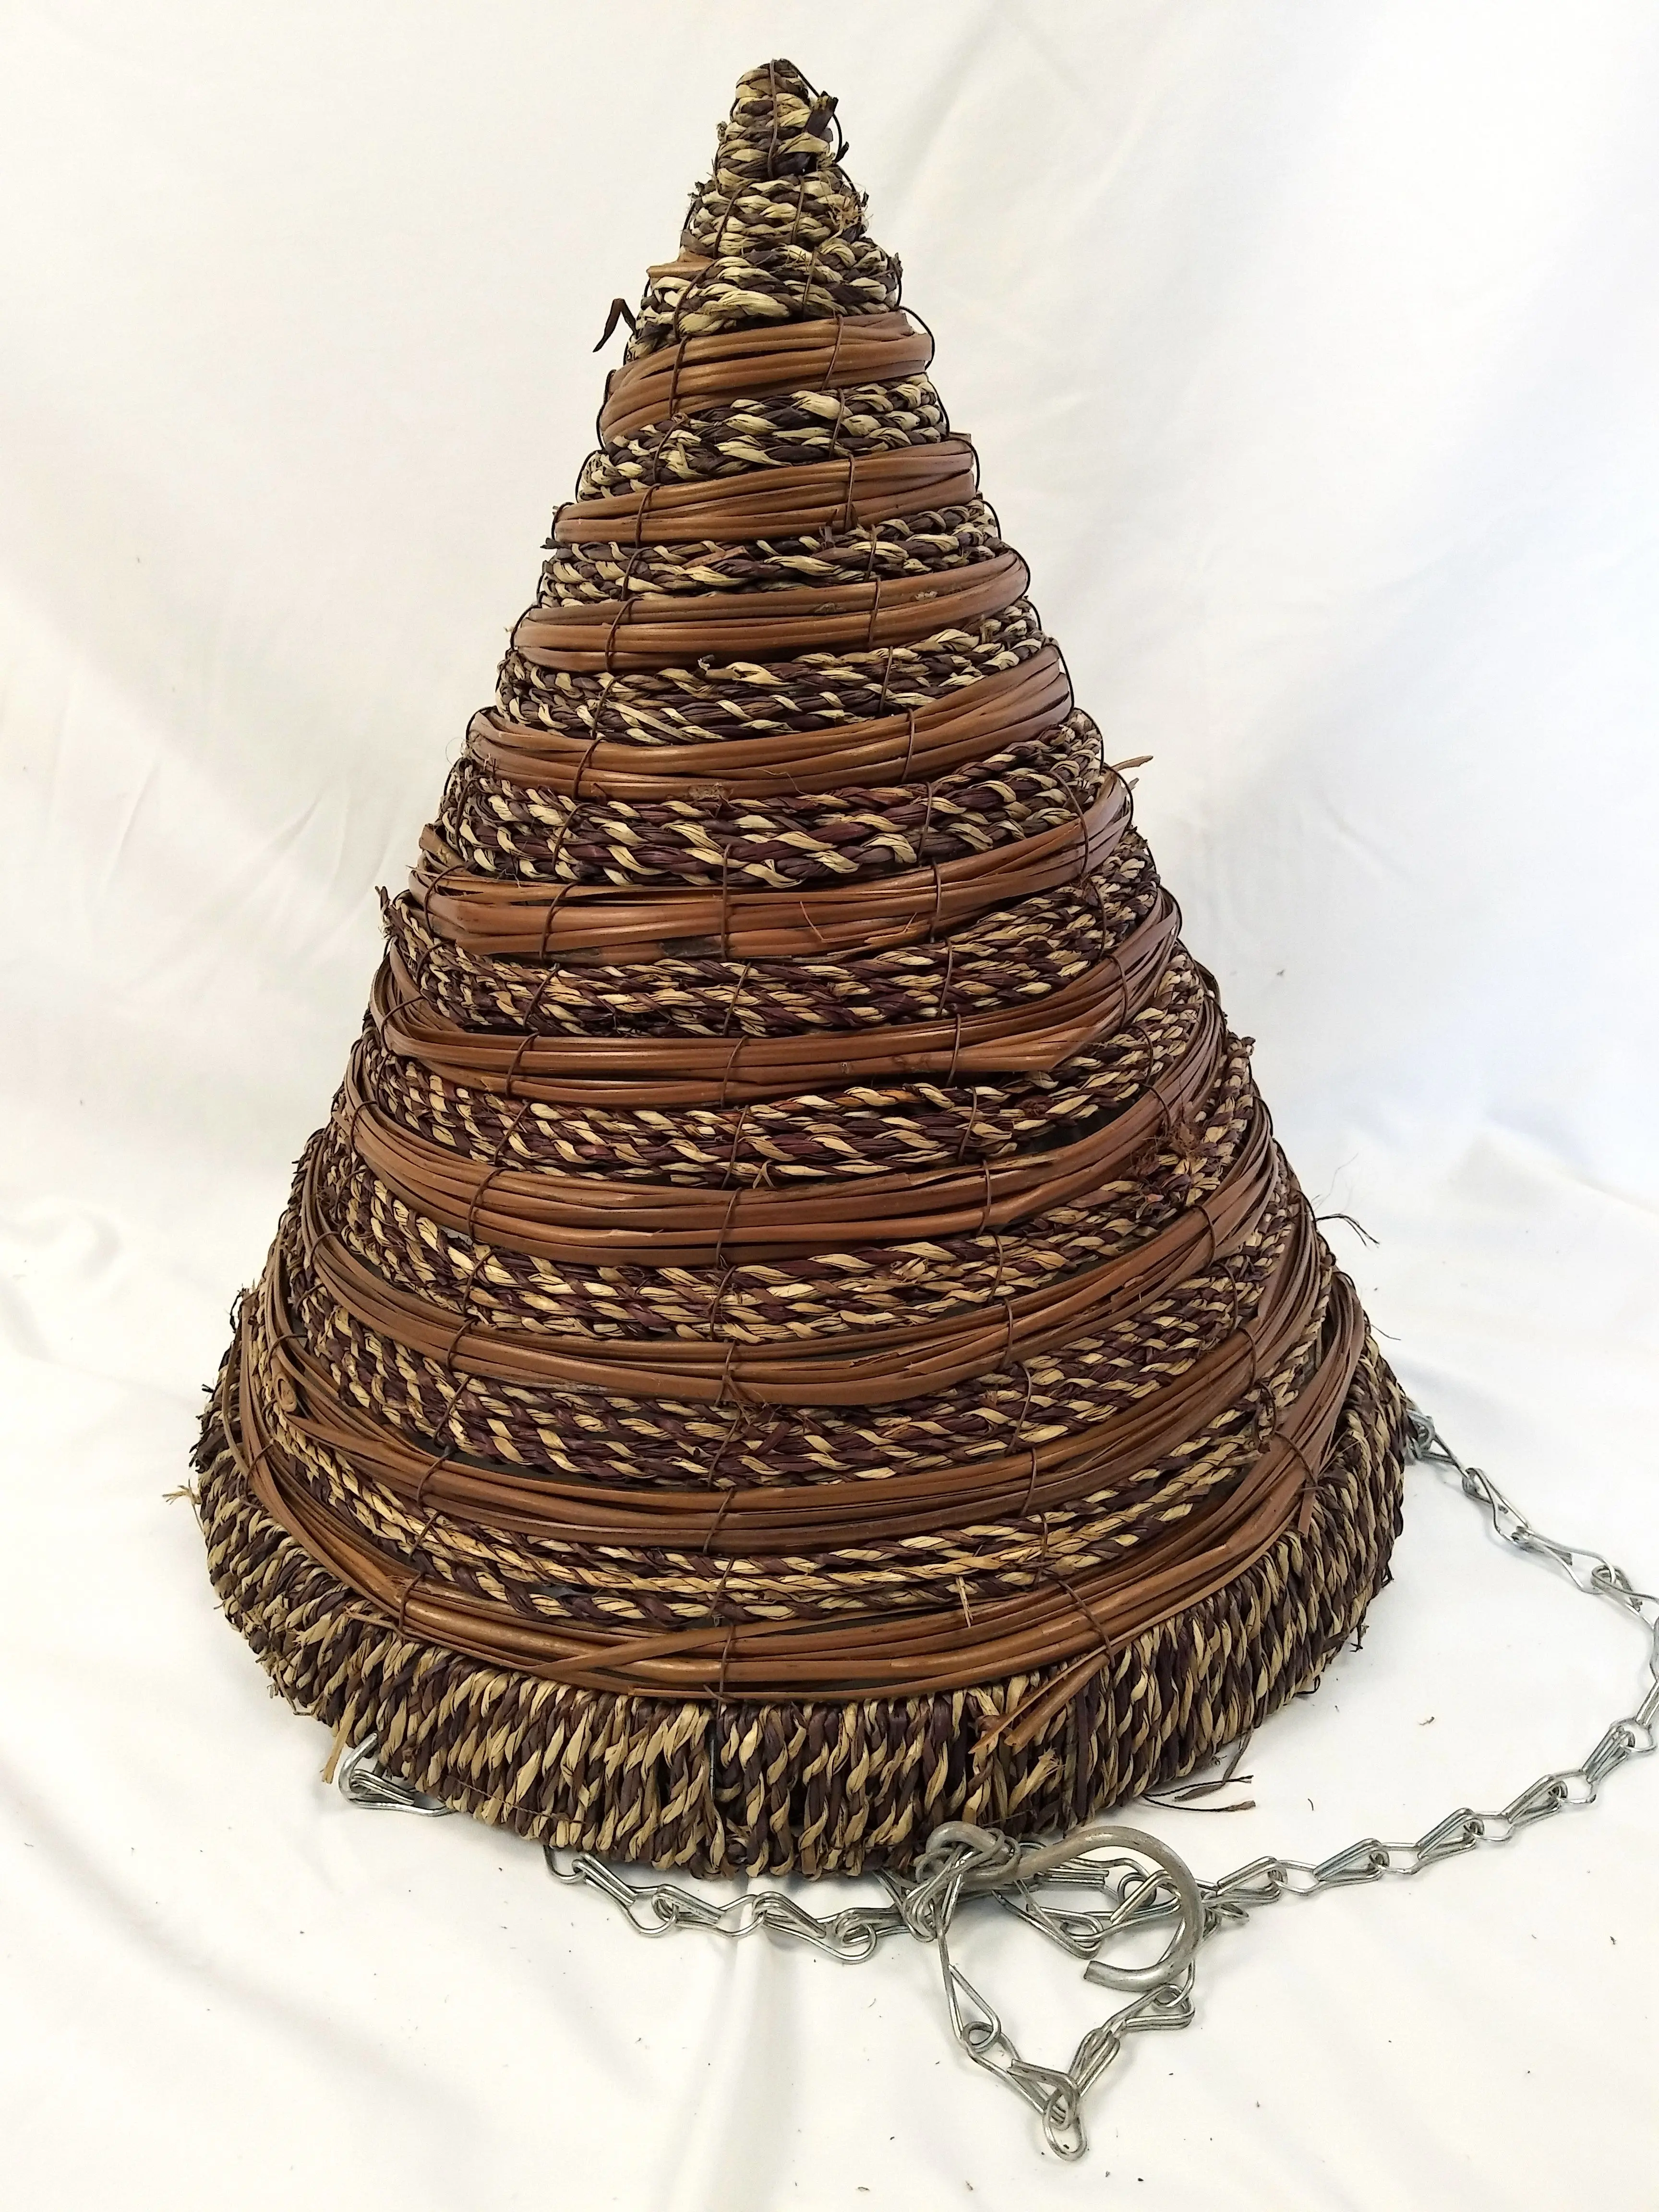 
Hot sale Wholesale Natural Seagrass Fern Hanging basket Flower Plant Pot For Home Decoration 